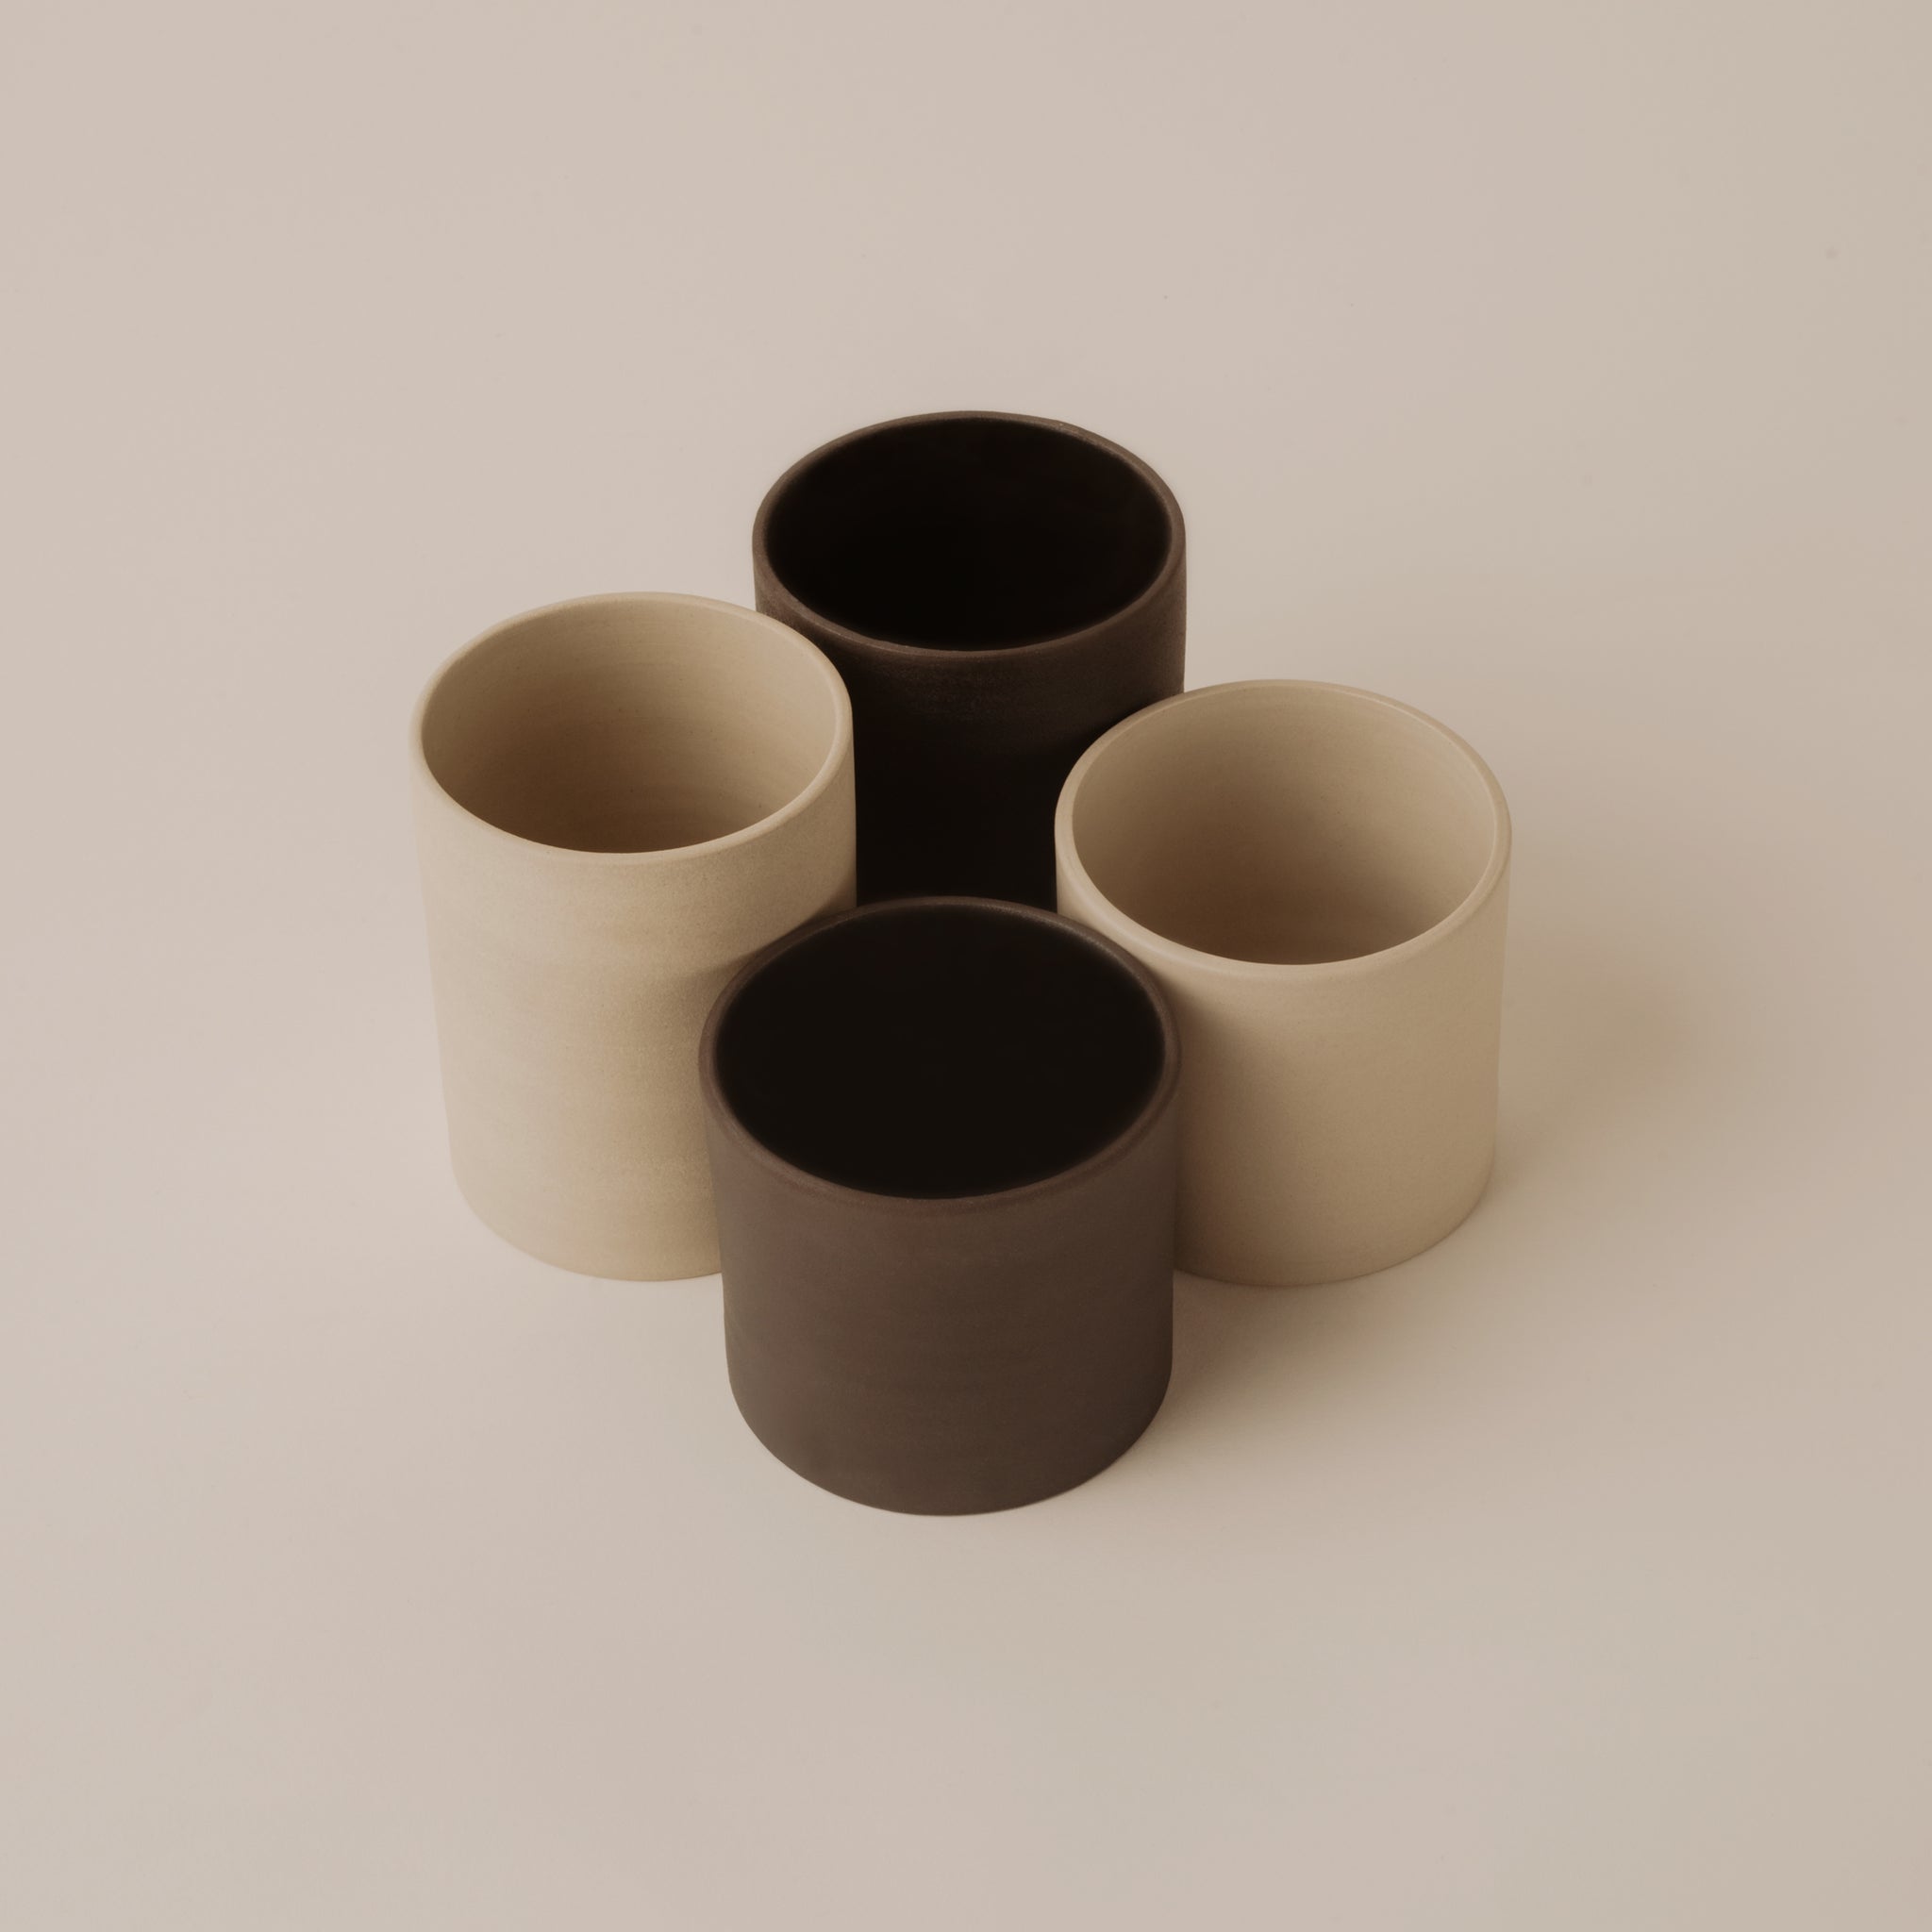 handmade ceramic cups clai studio ceramic atelier pottery studio in Berlin Prenzlauer Berg